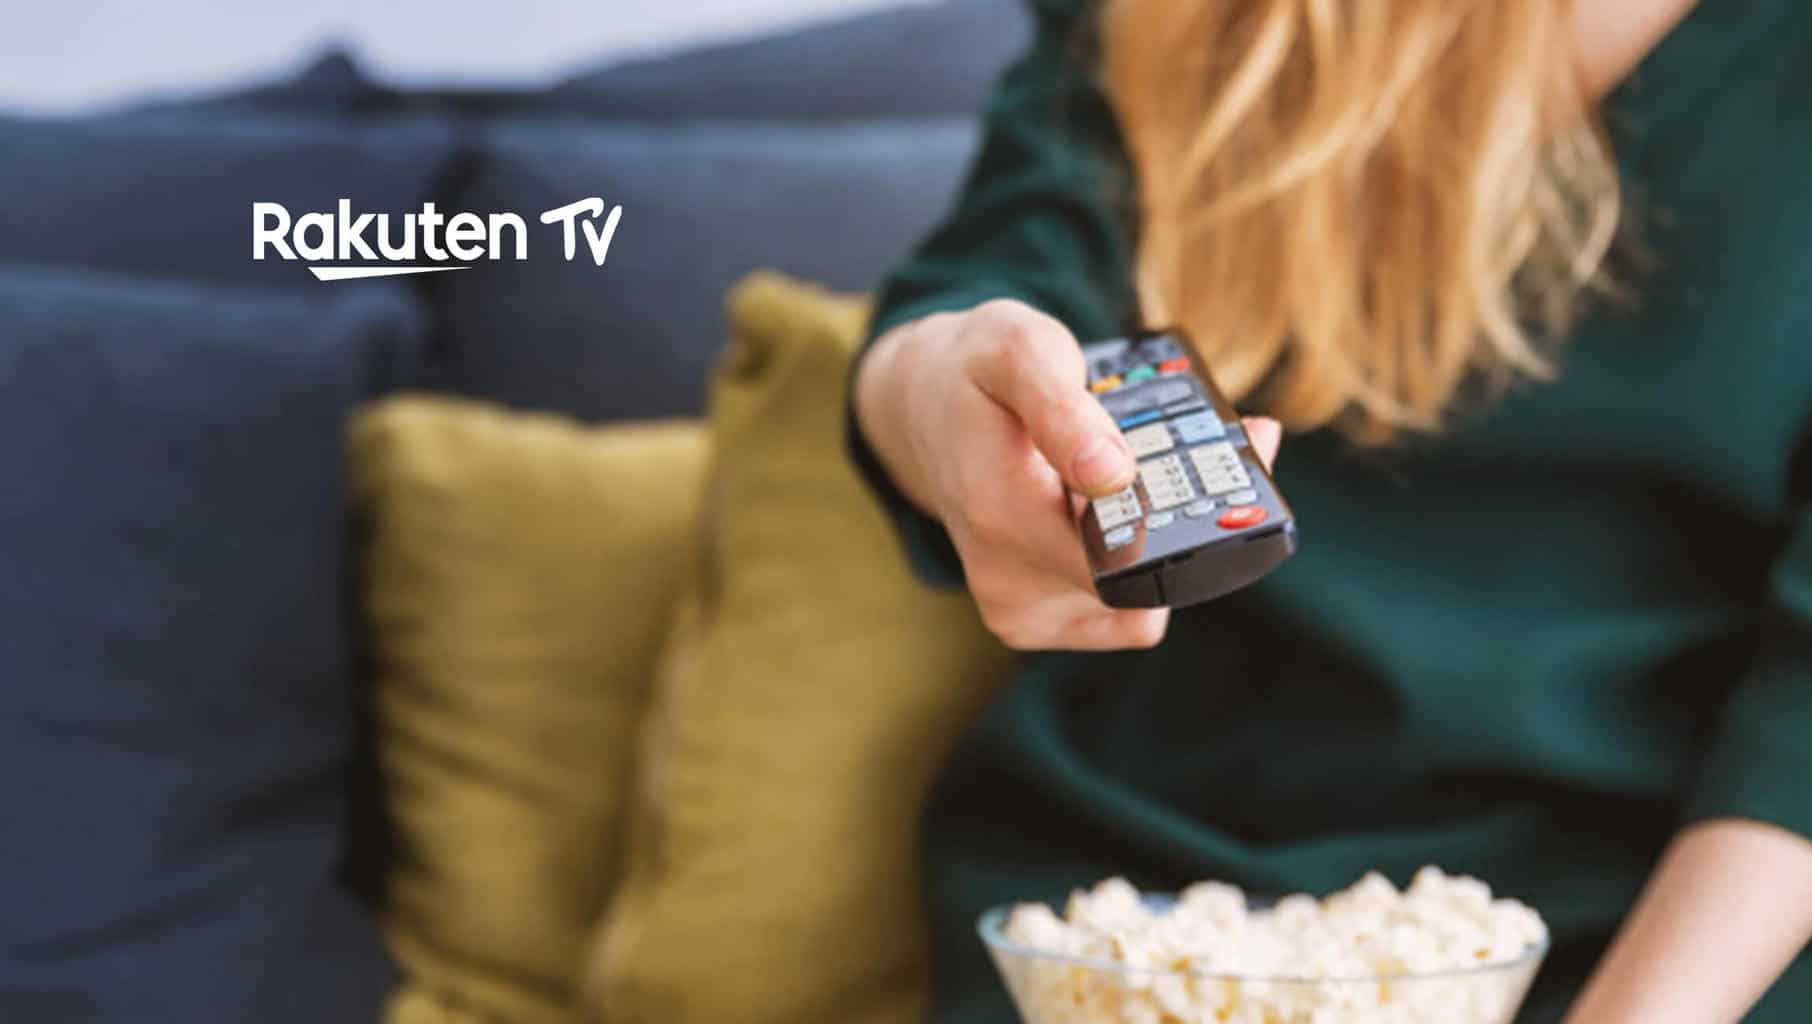 Rakuten TV Debuts a New Platform Called AVOD in Europe